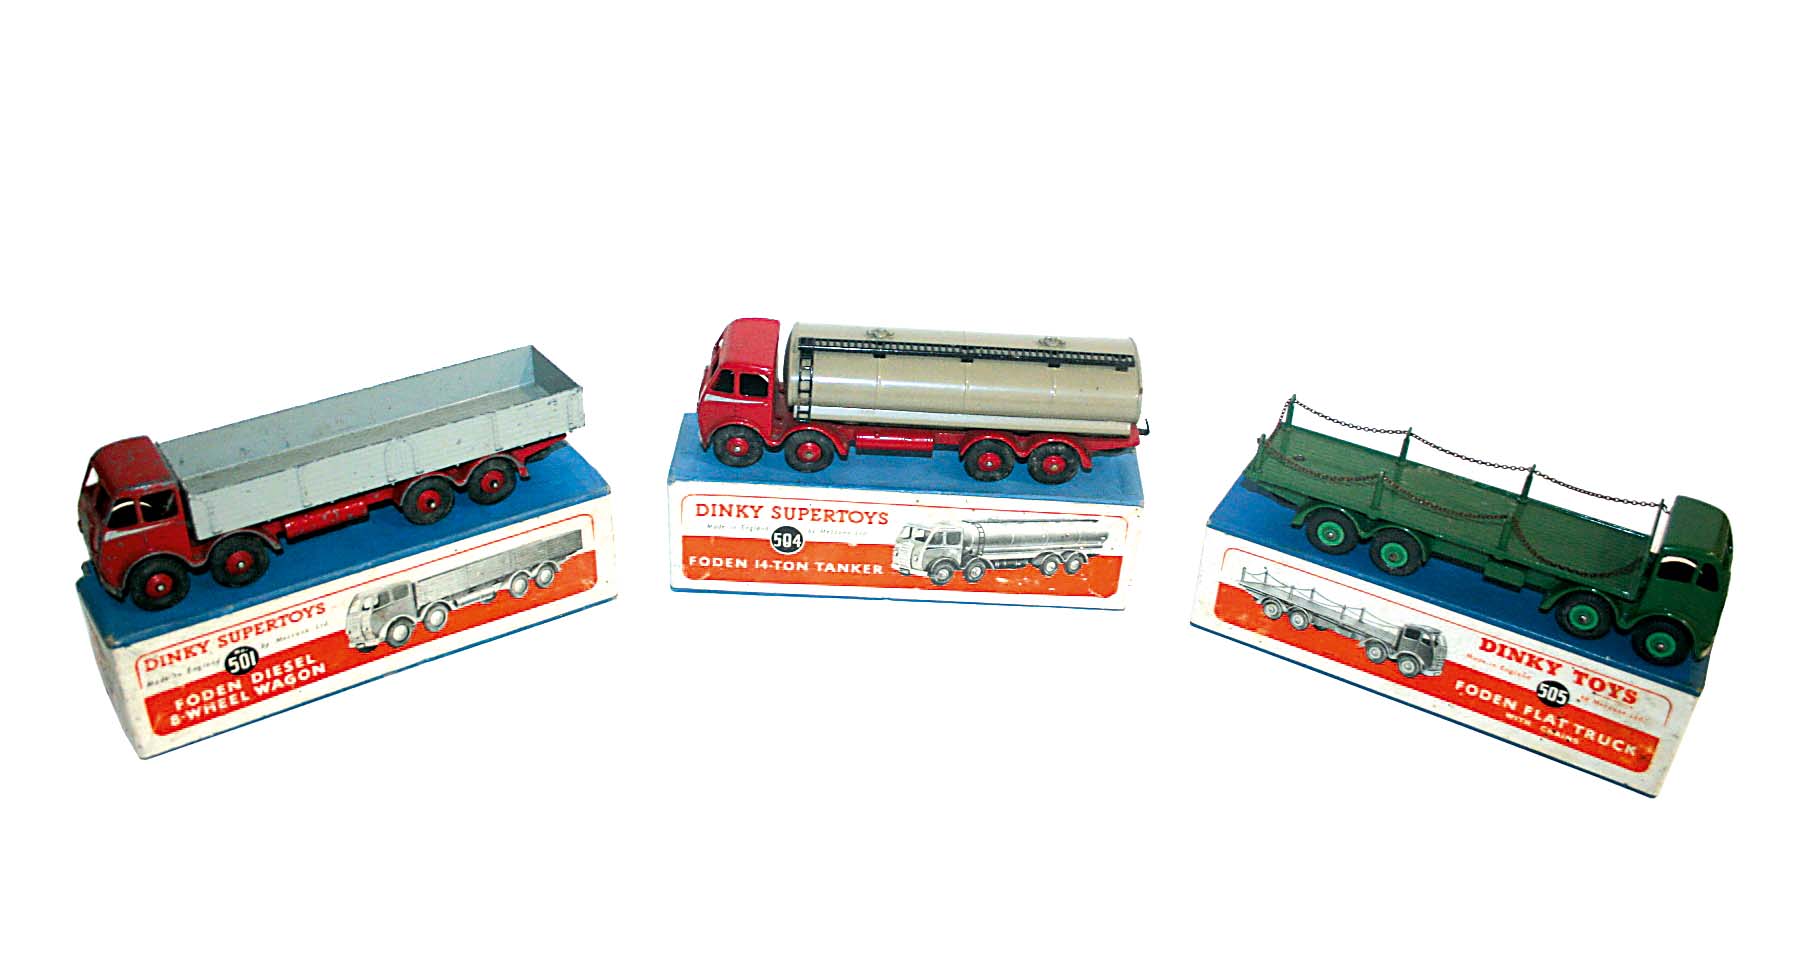 BOXED DINKY TOYS - FODEN 3 boxed Dinky Toys, 505 Foden Flat Truck (all green), 504 Foden 14-Ton